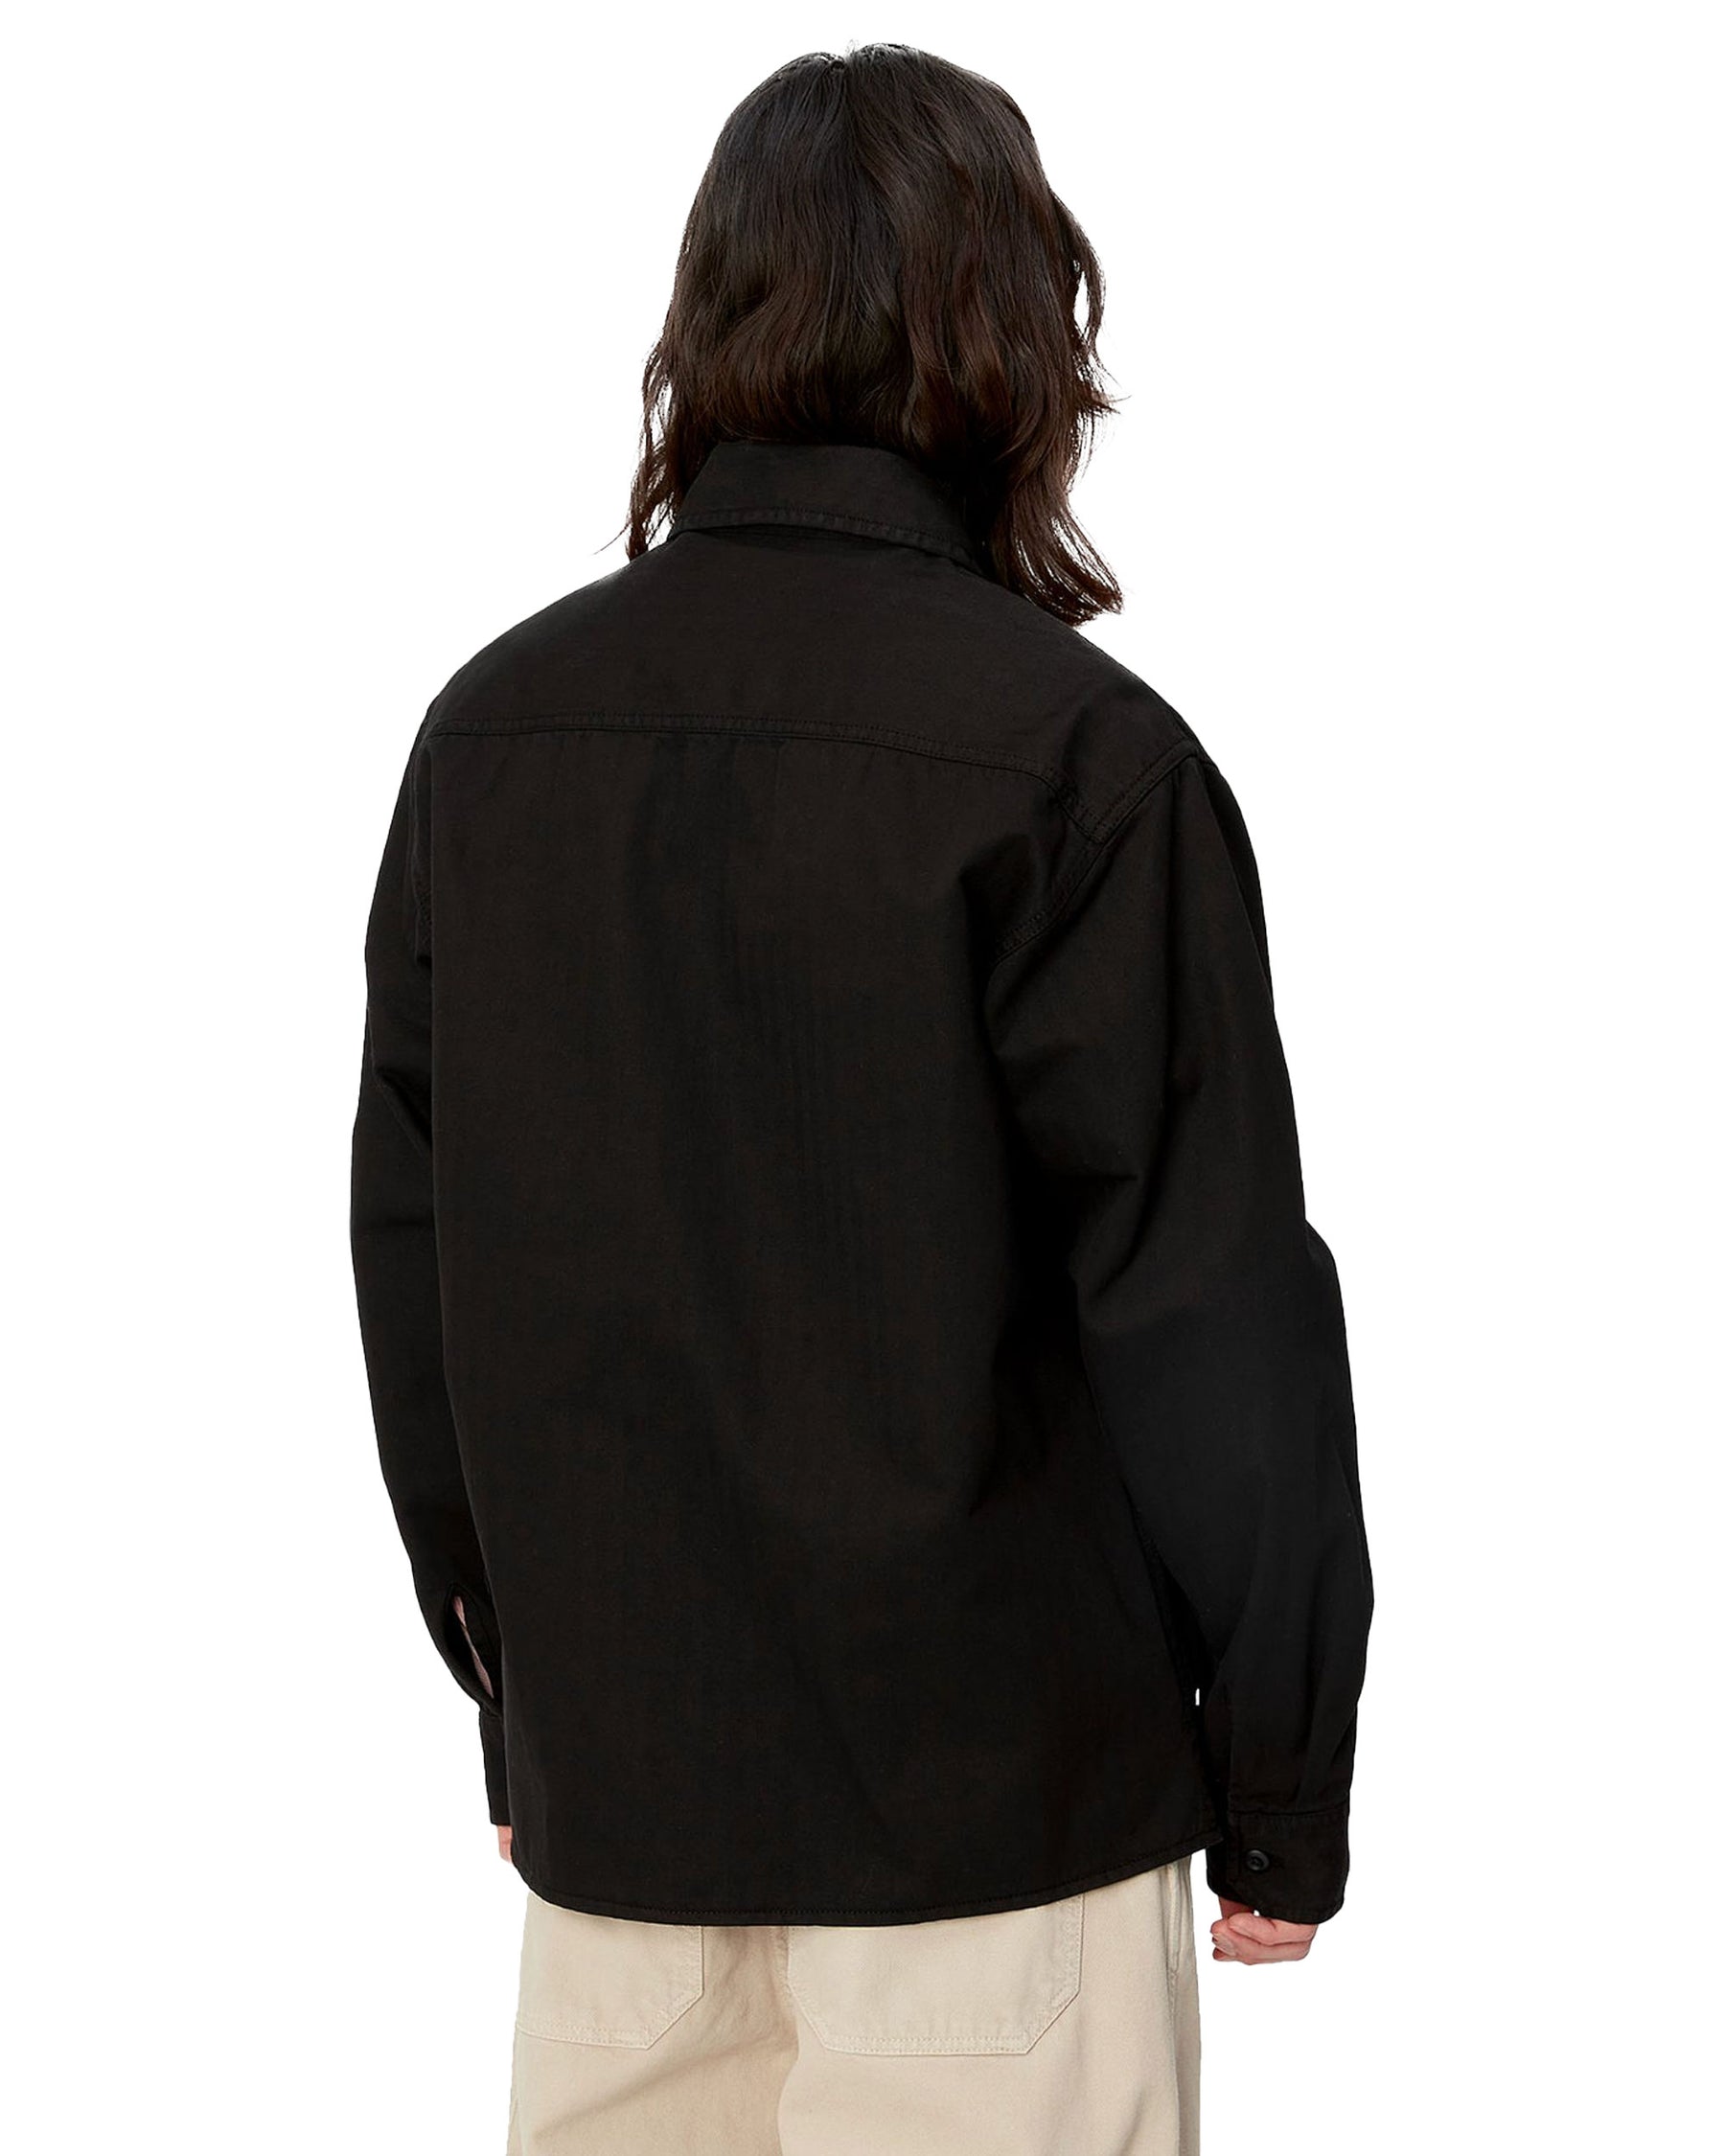 Carhartt Wip Rainer Shirt Jacket Black